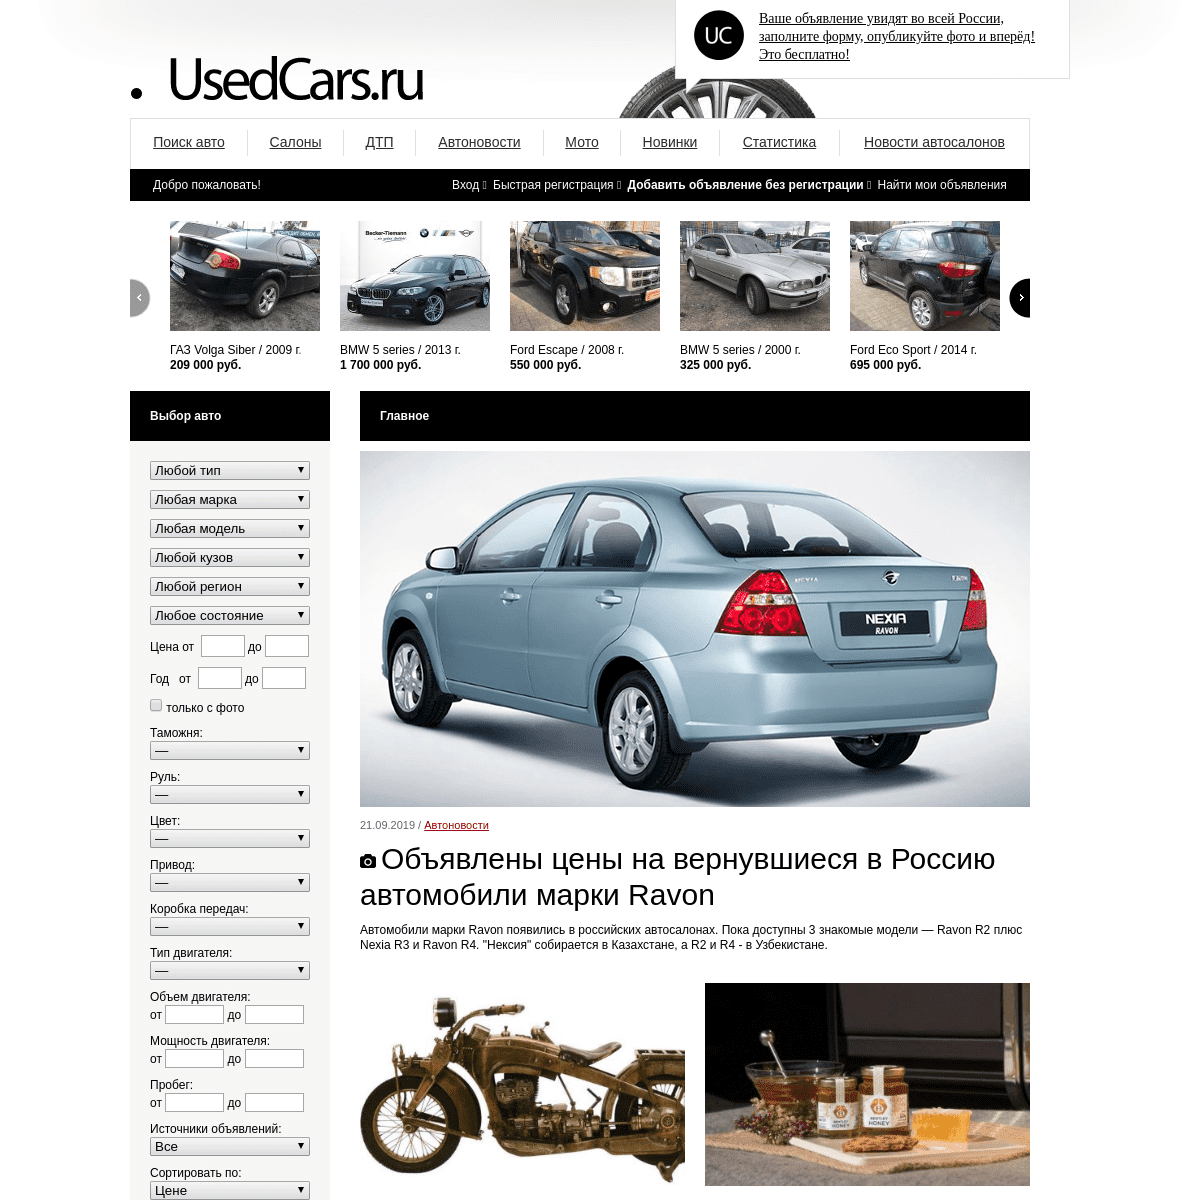 A complete backup of usedcars.ru